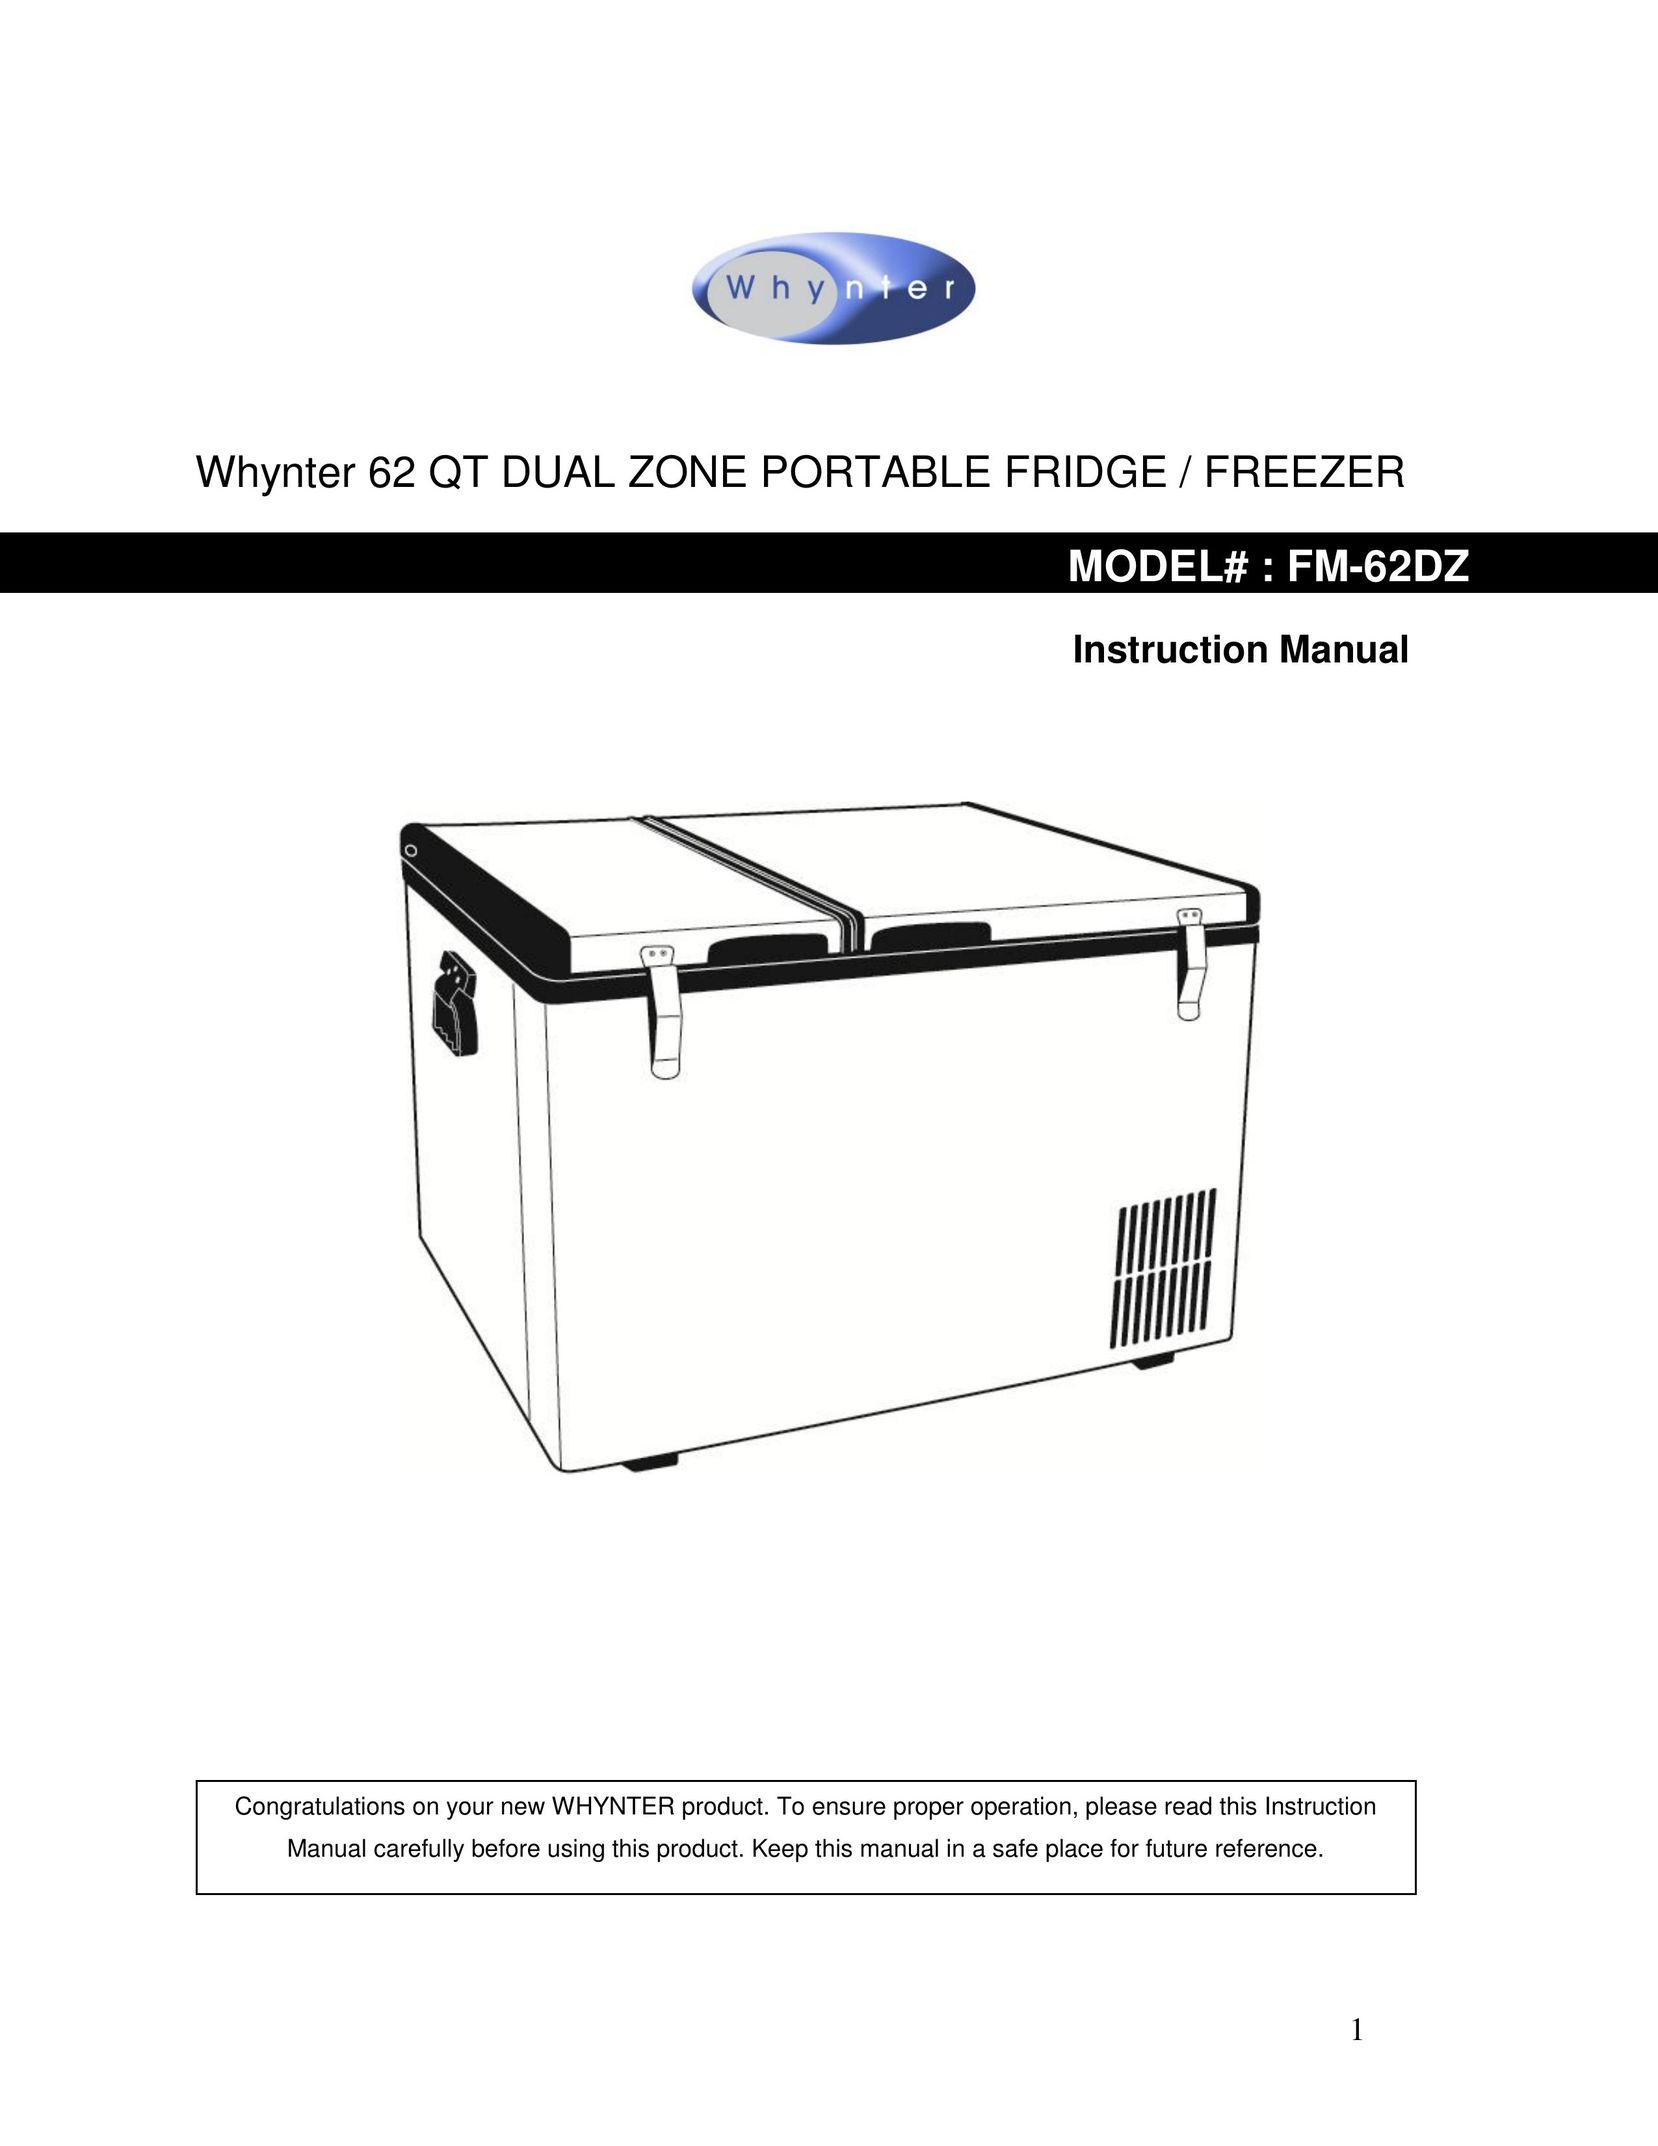 Whynter FM-62DZ Freezer User Manual